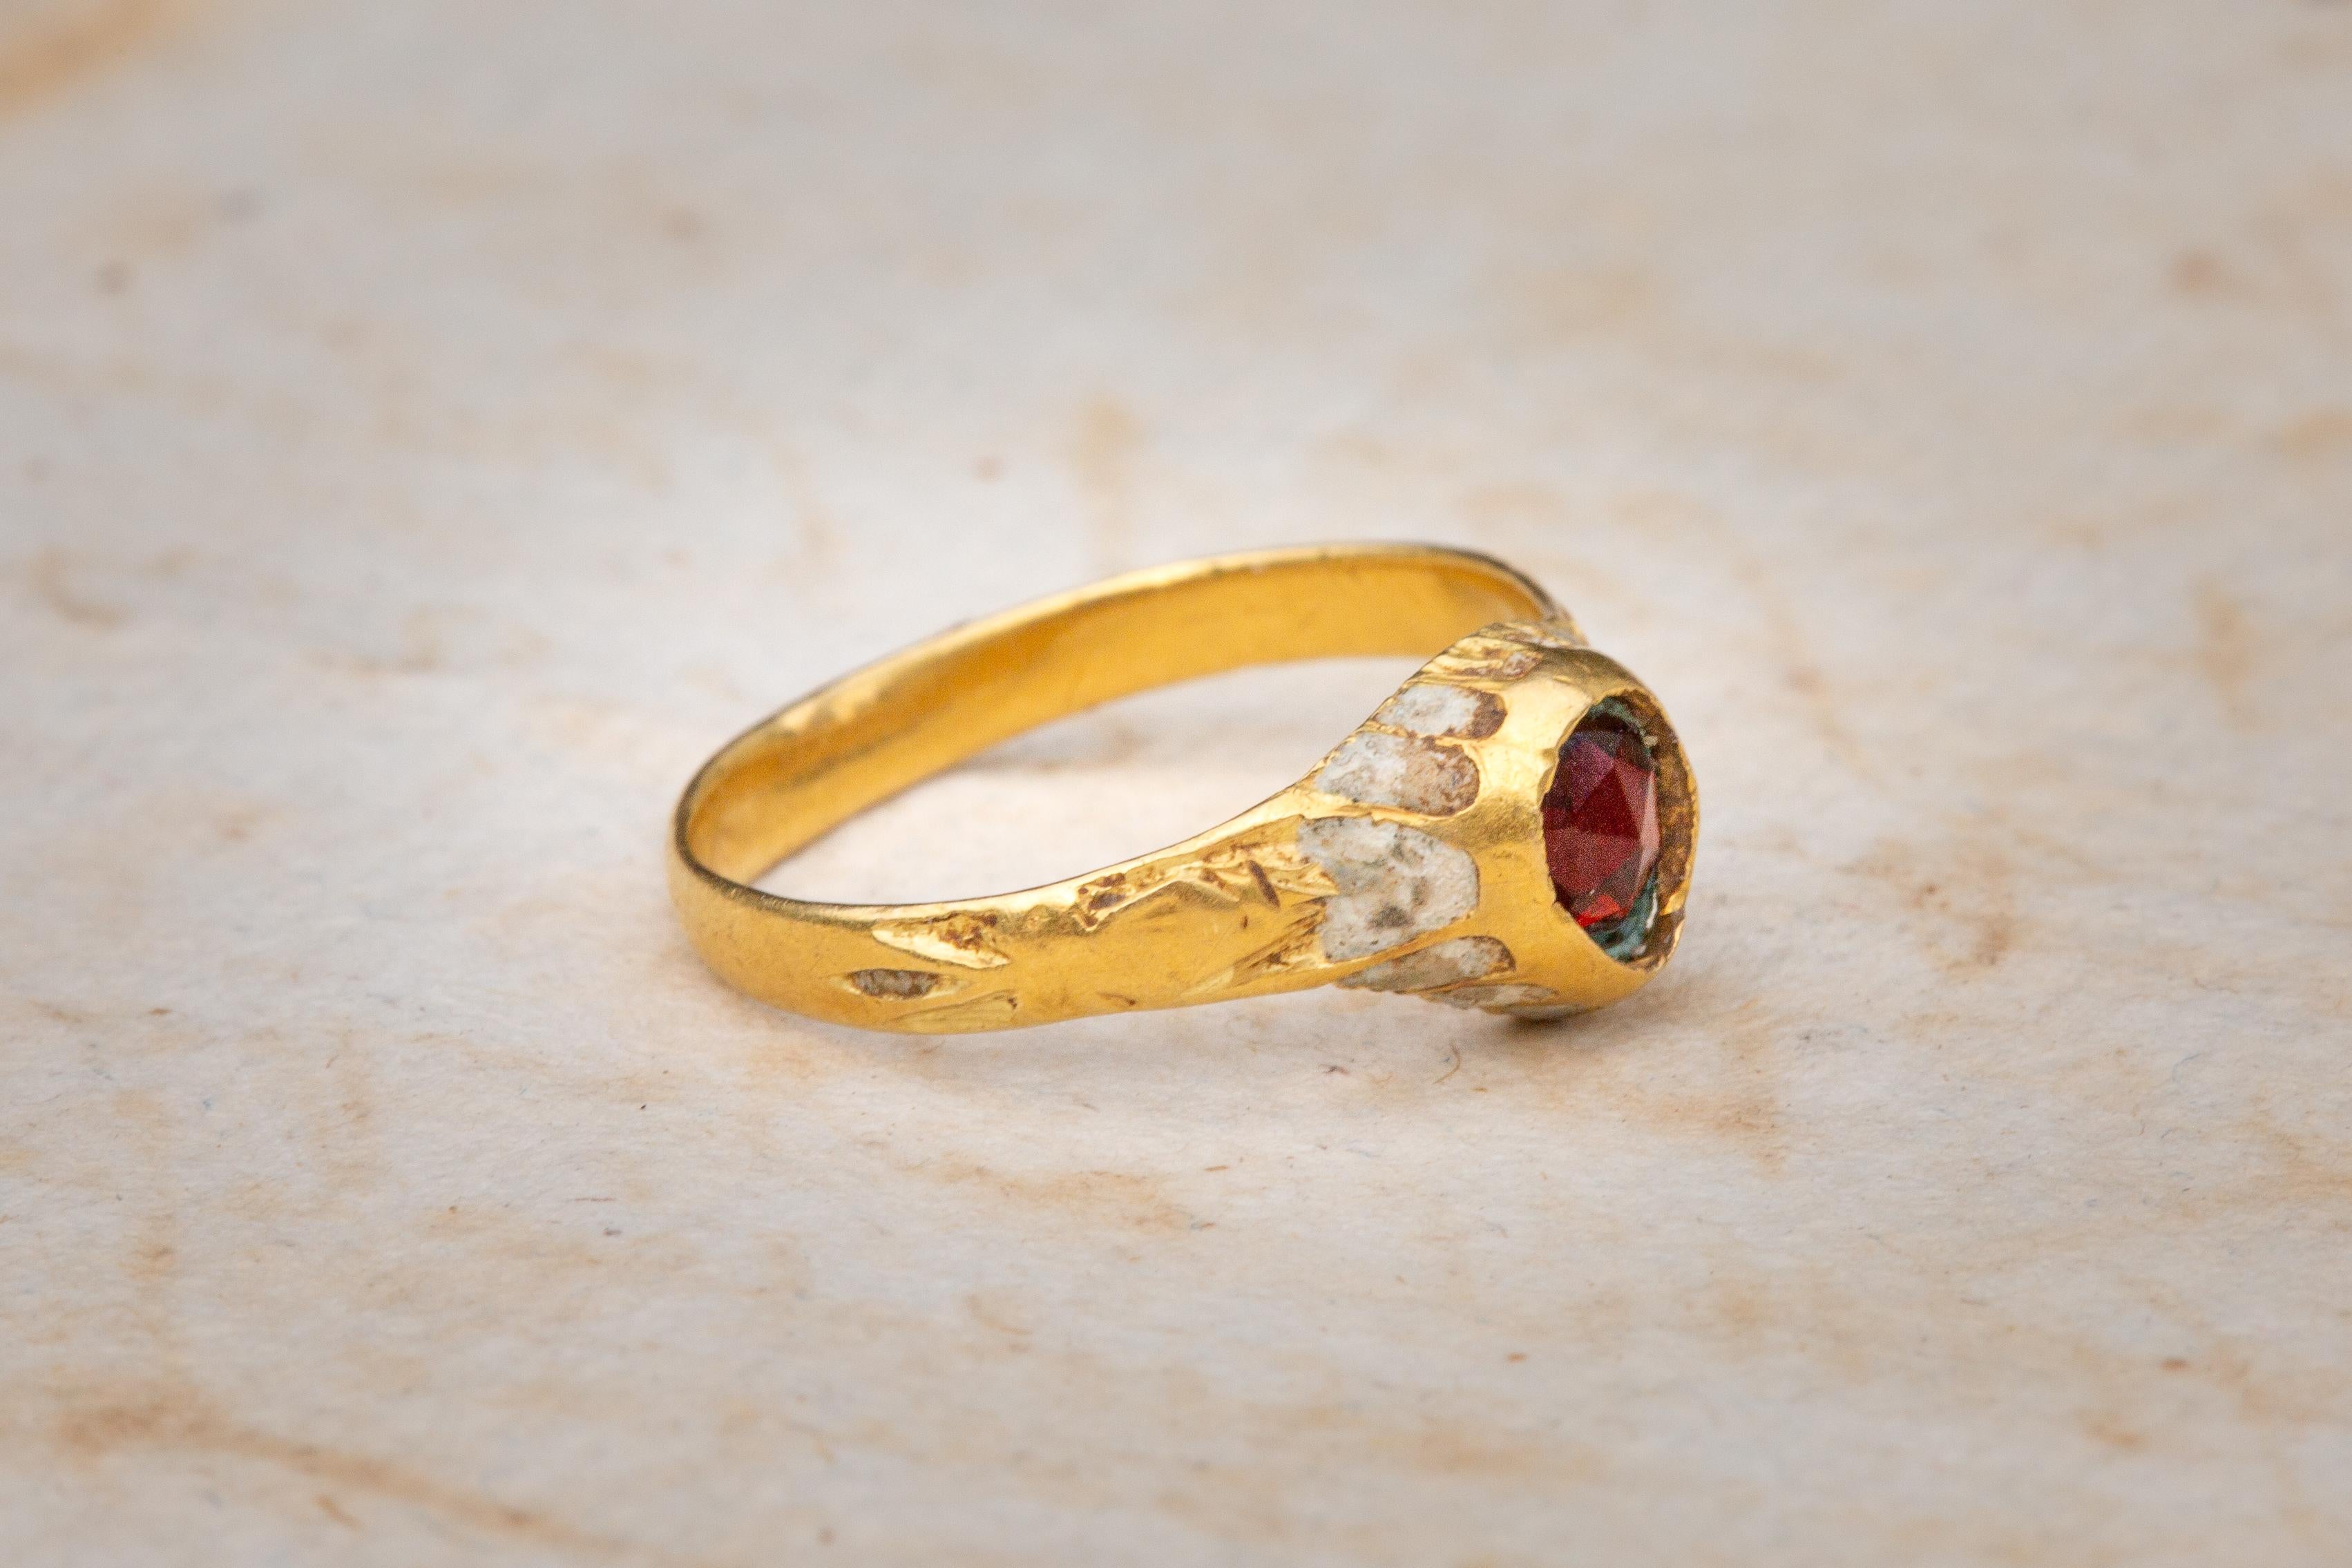 Renaissance Early 17th Century Enamelled 22K Gold Rose Cut Garnet Ring For Sale 2